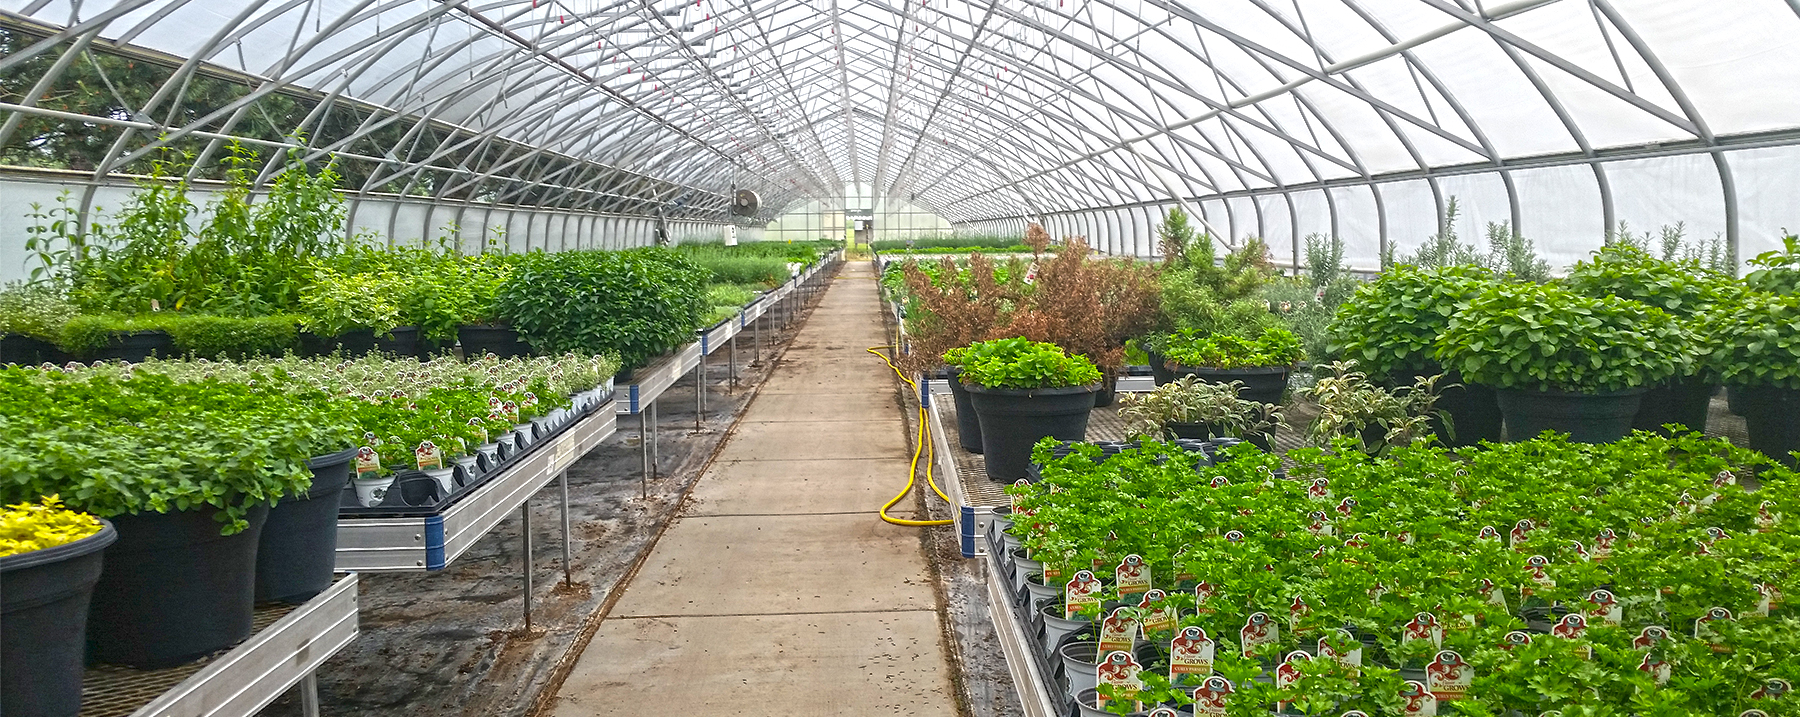 Commercial Wholesale Greenhouse Buffalo NY| Herbs| Plugs